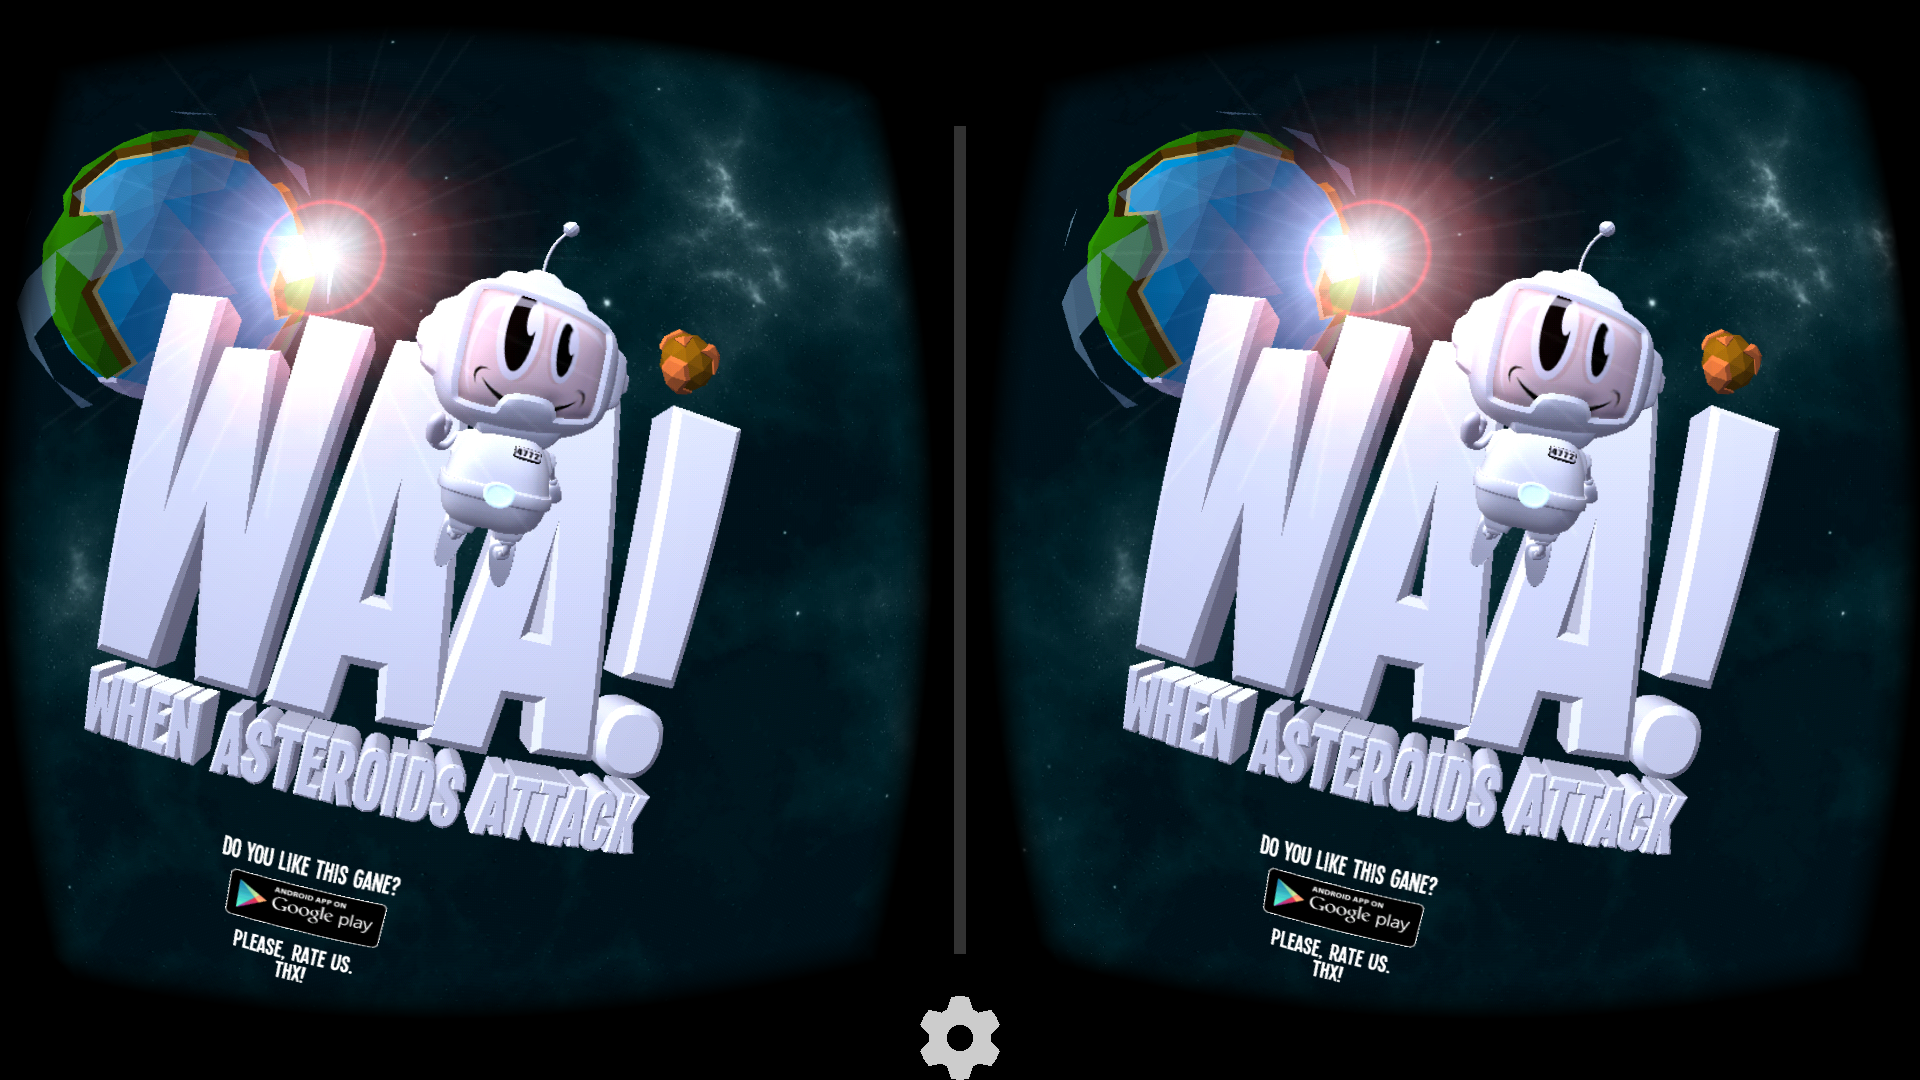 WAA! VR / When Asteroids attack!